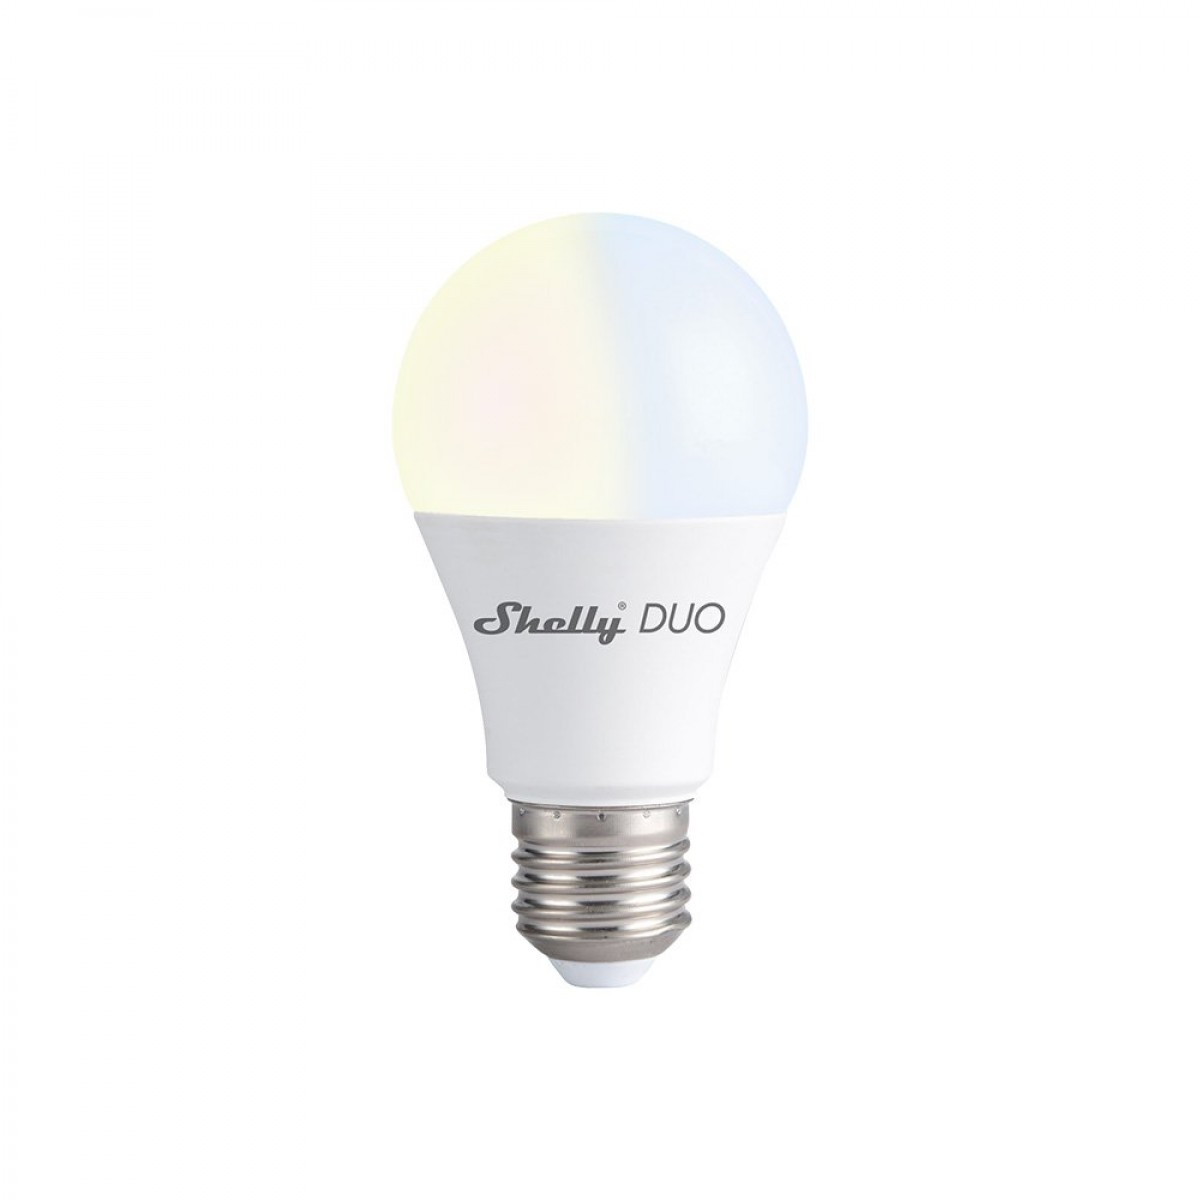 Shelly Duo WLAN LED Lampe, warmweiß + kaltweis, dimmbar, E 27 Sockel, 9 Watt, 2.700 K - 6.500 K